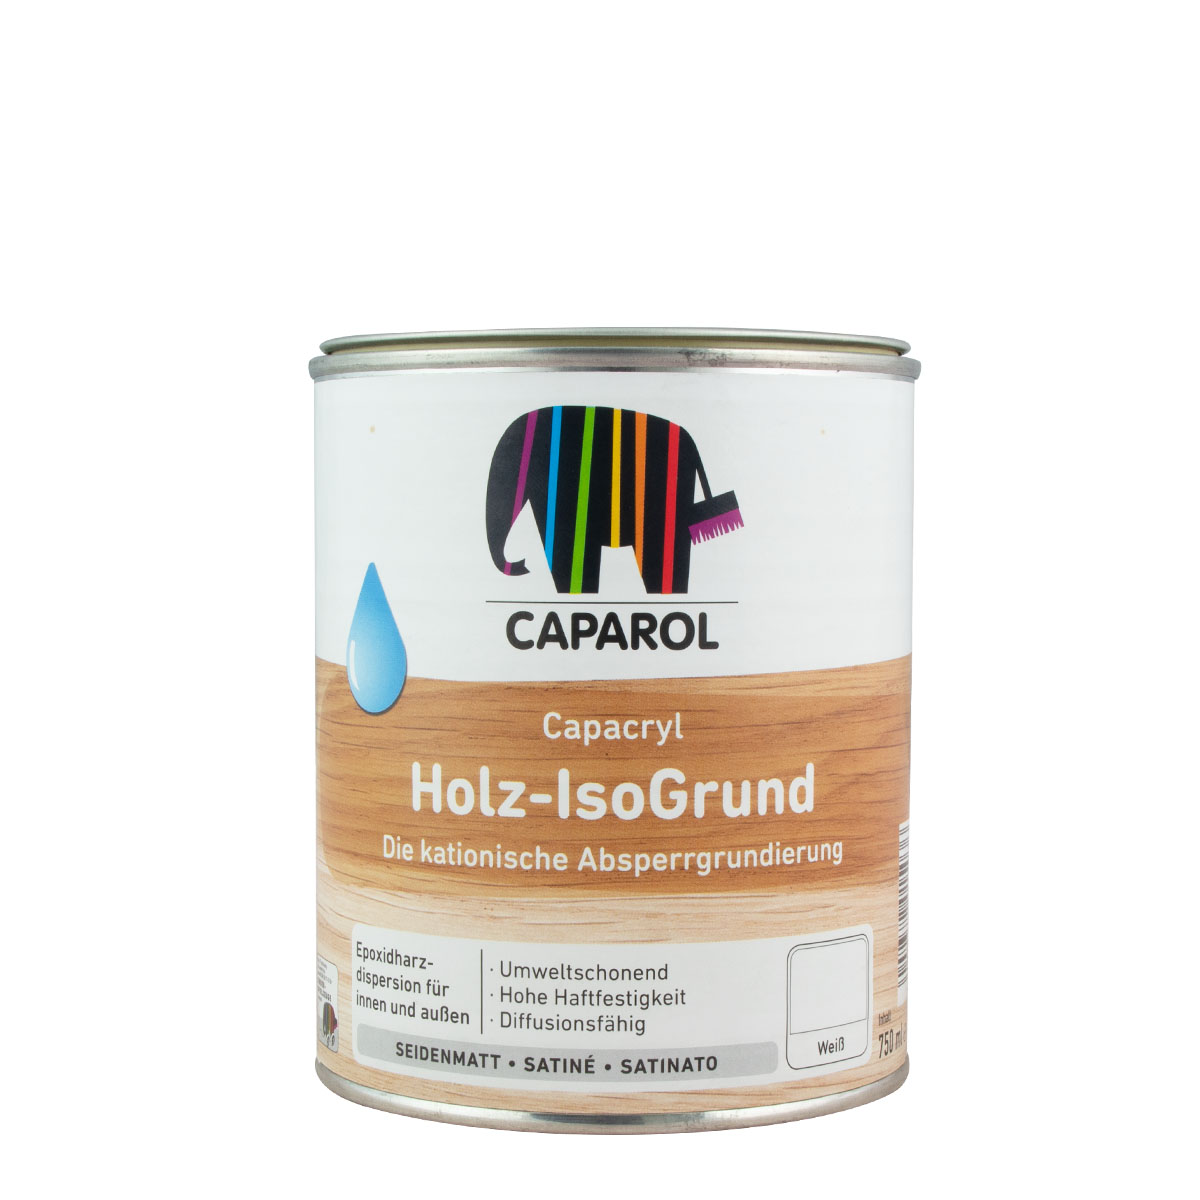 Caparol Capacryl Holz-Isogrund, 750ml weiß, Absperrgrundierung